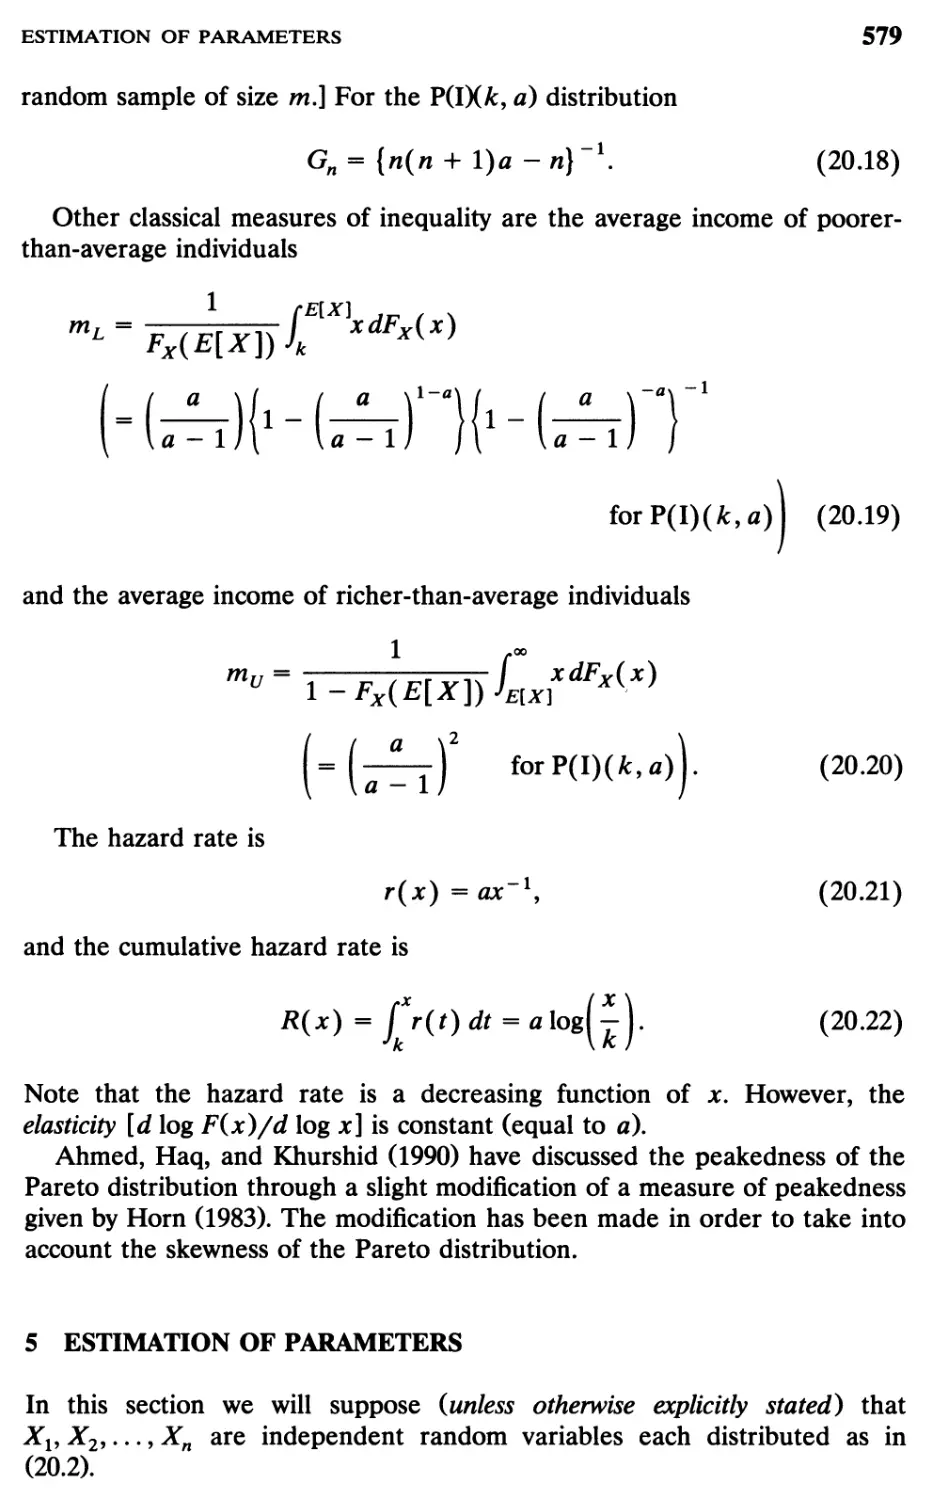 5 Estimation of Parameters, 579